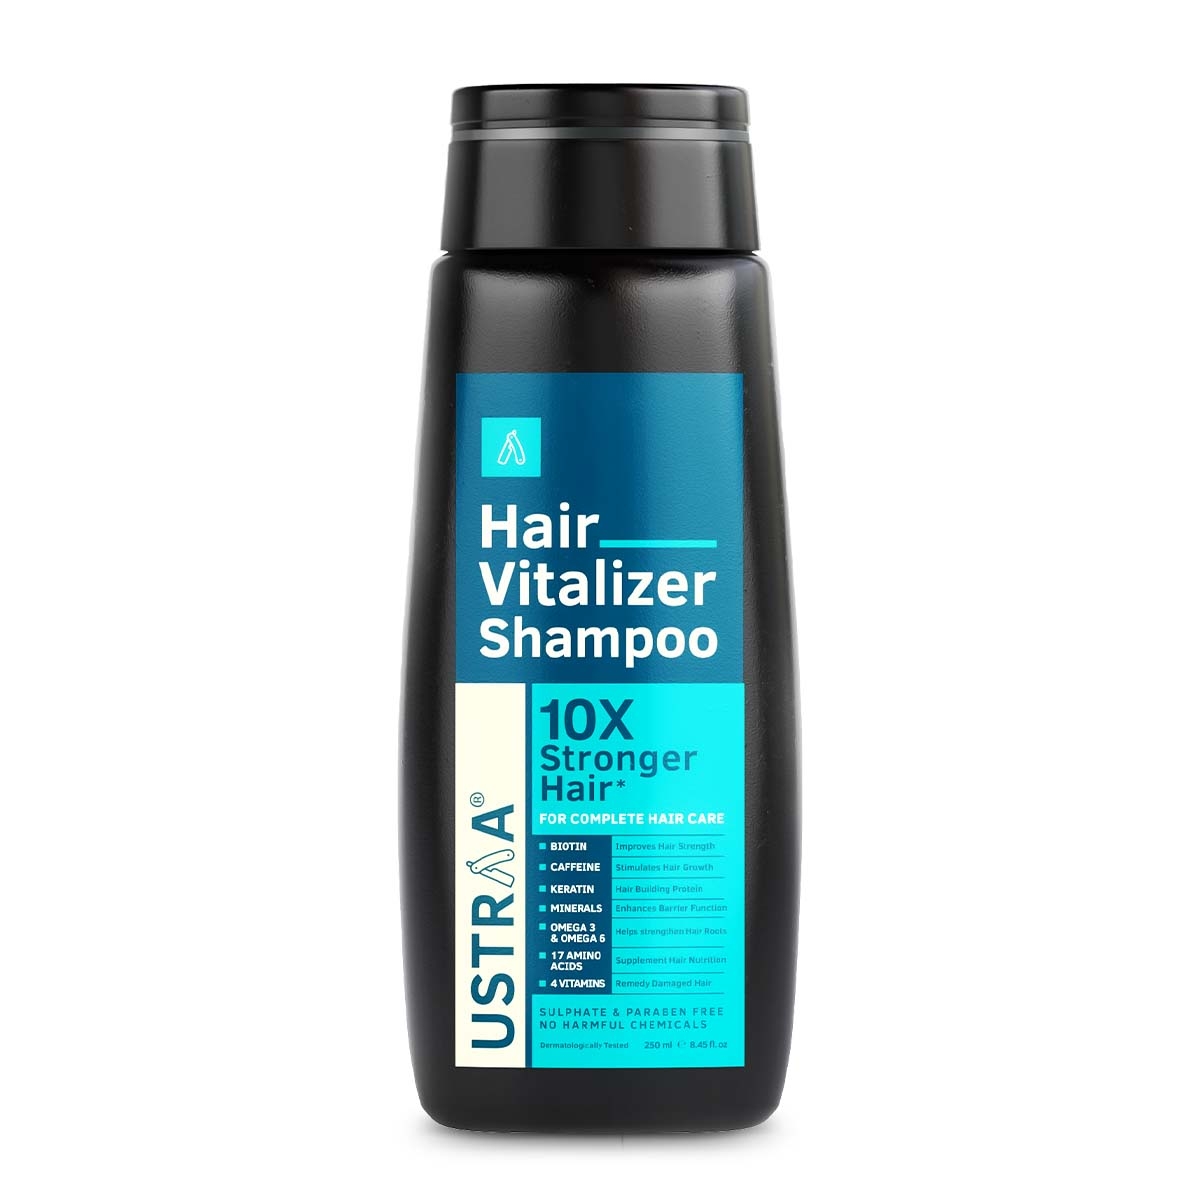 Ustraa Hair Vitalizer Shampoo - 250ml & Daily-Use Hair Cream - 100g